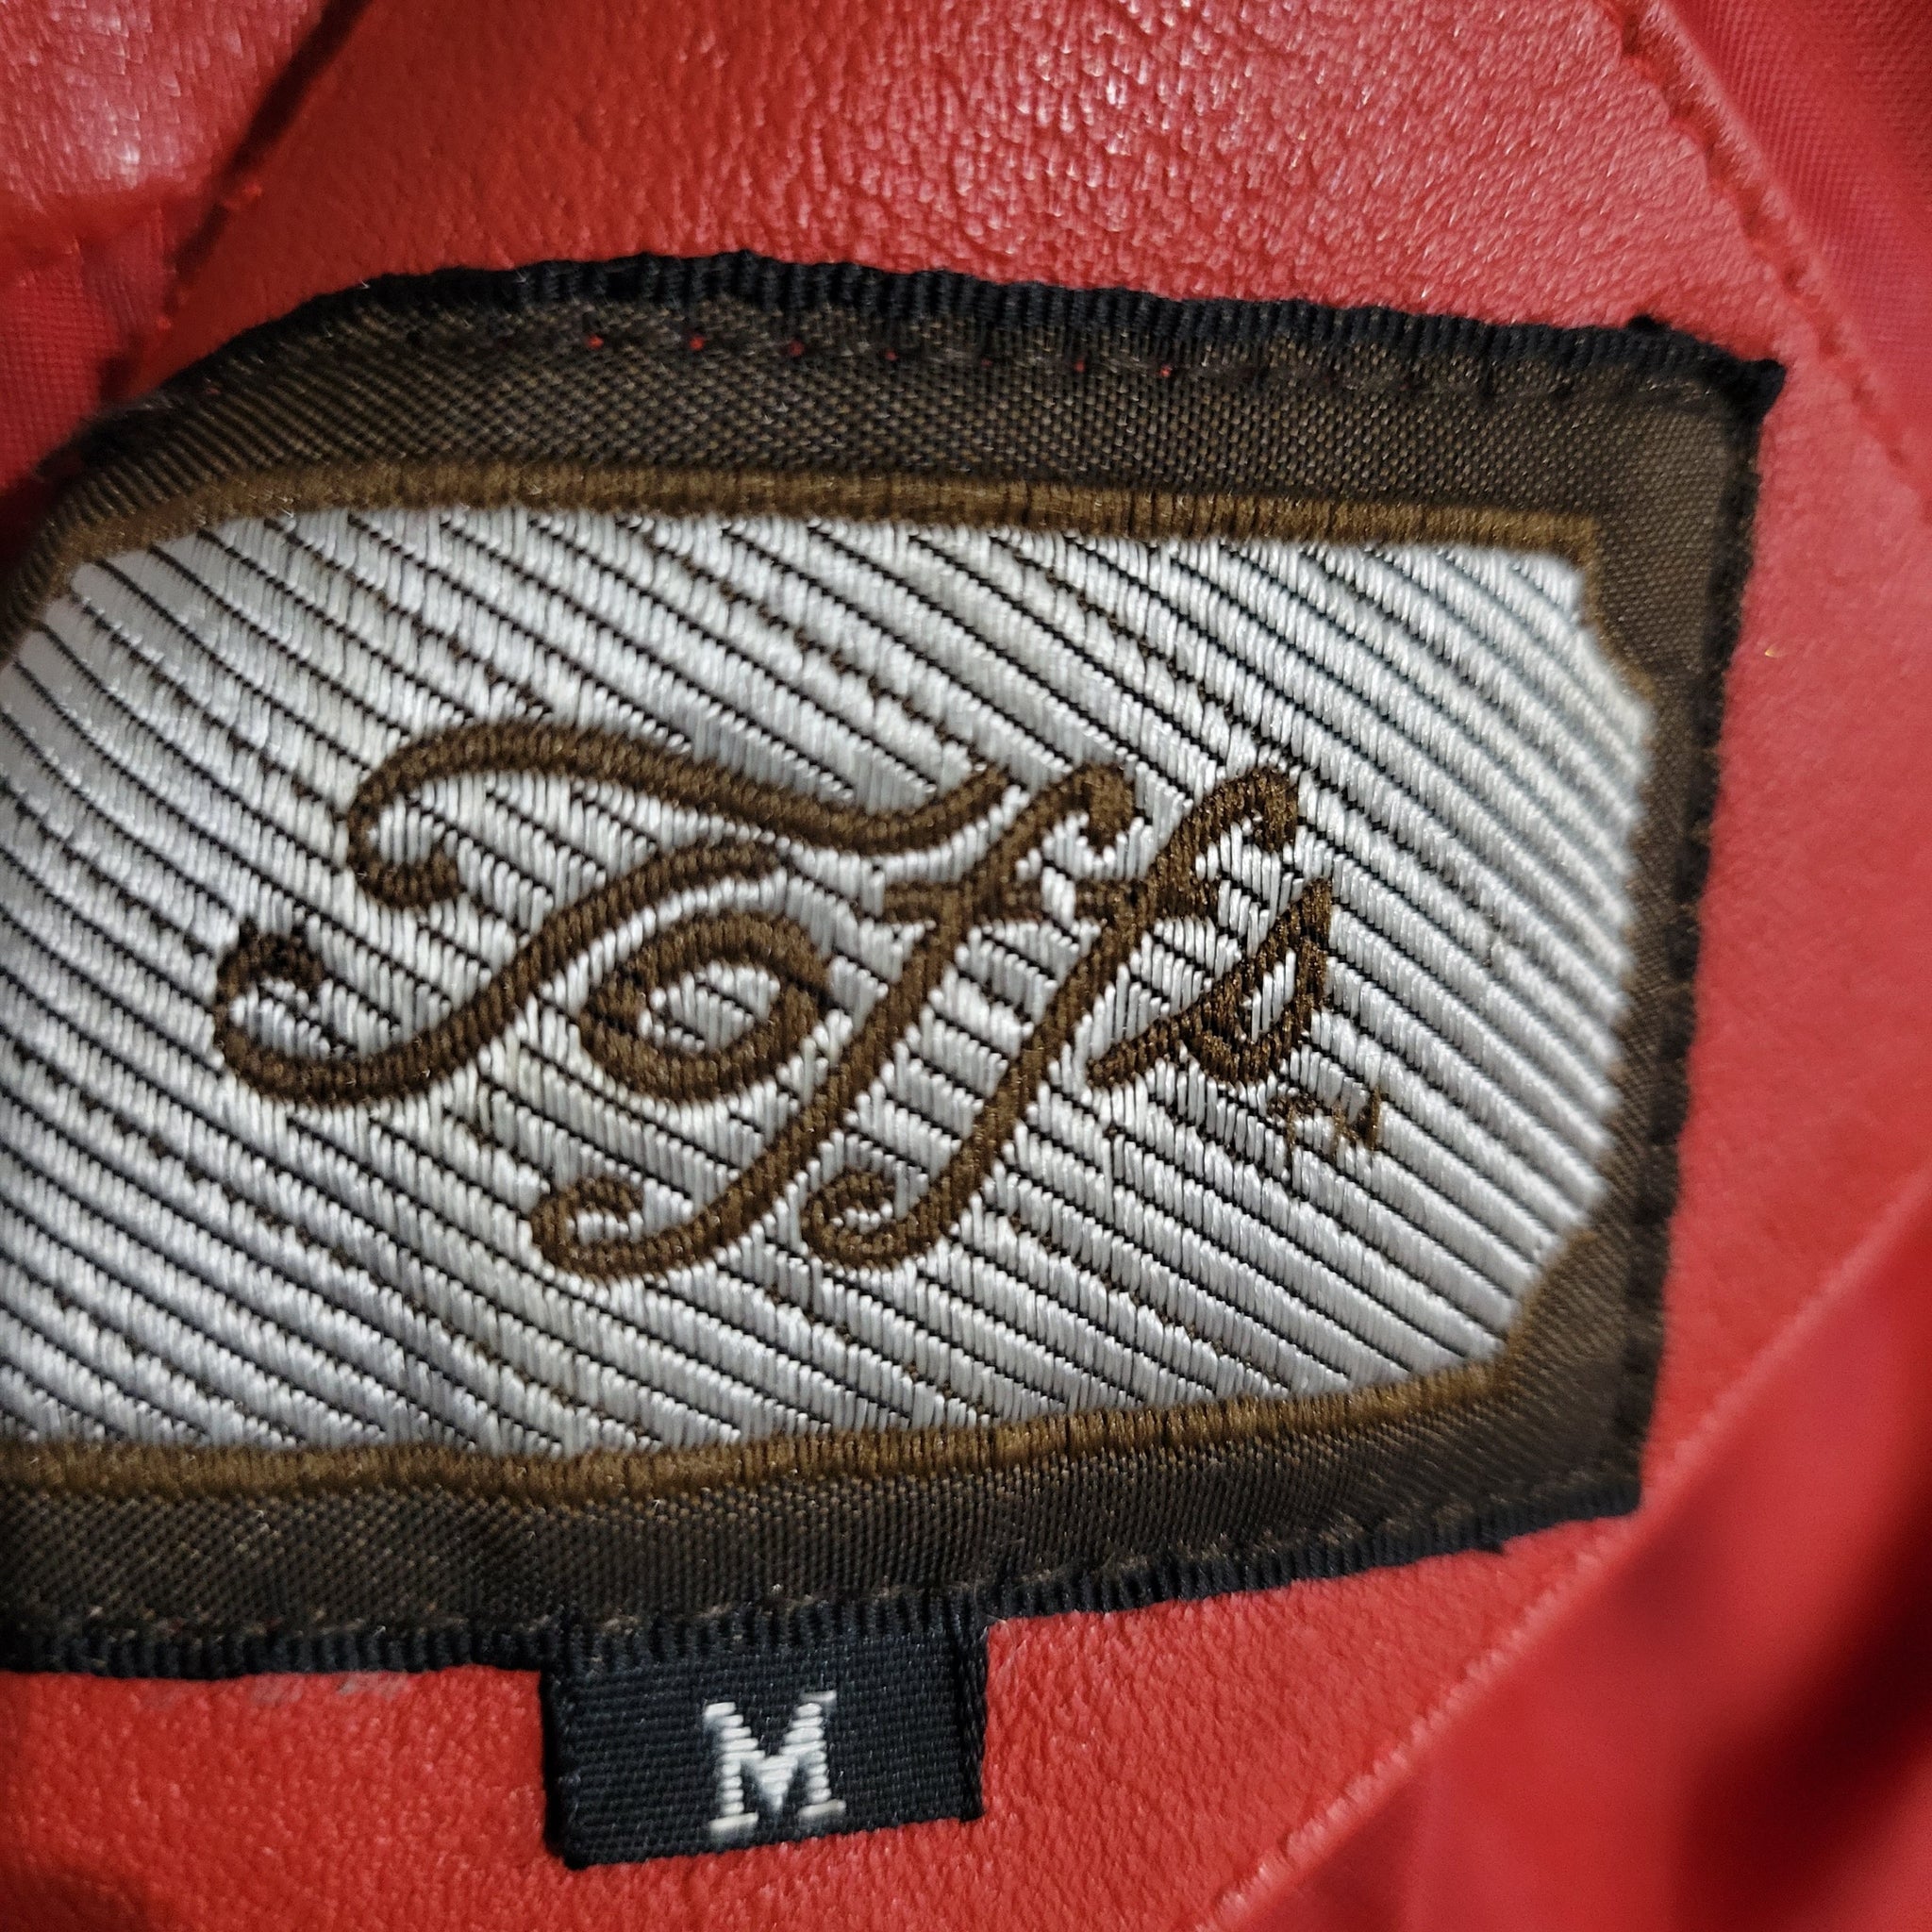 Vintage 80s Toffs Red Leather Jacket Size Medium